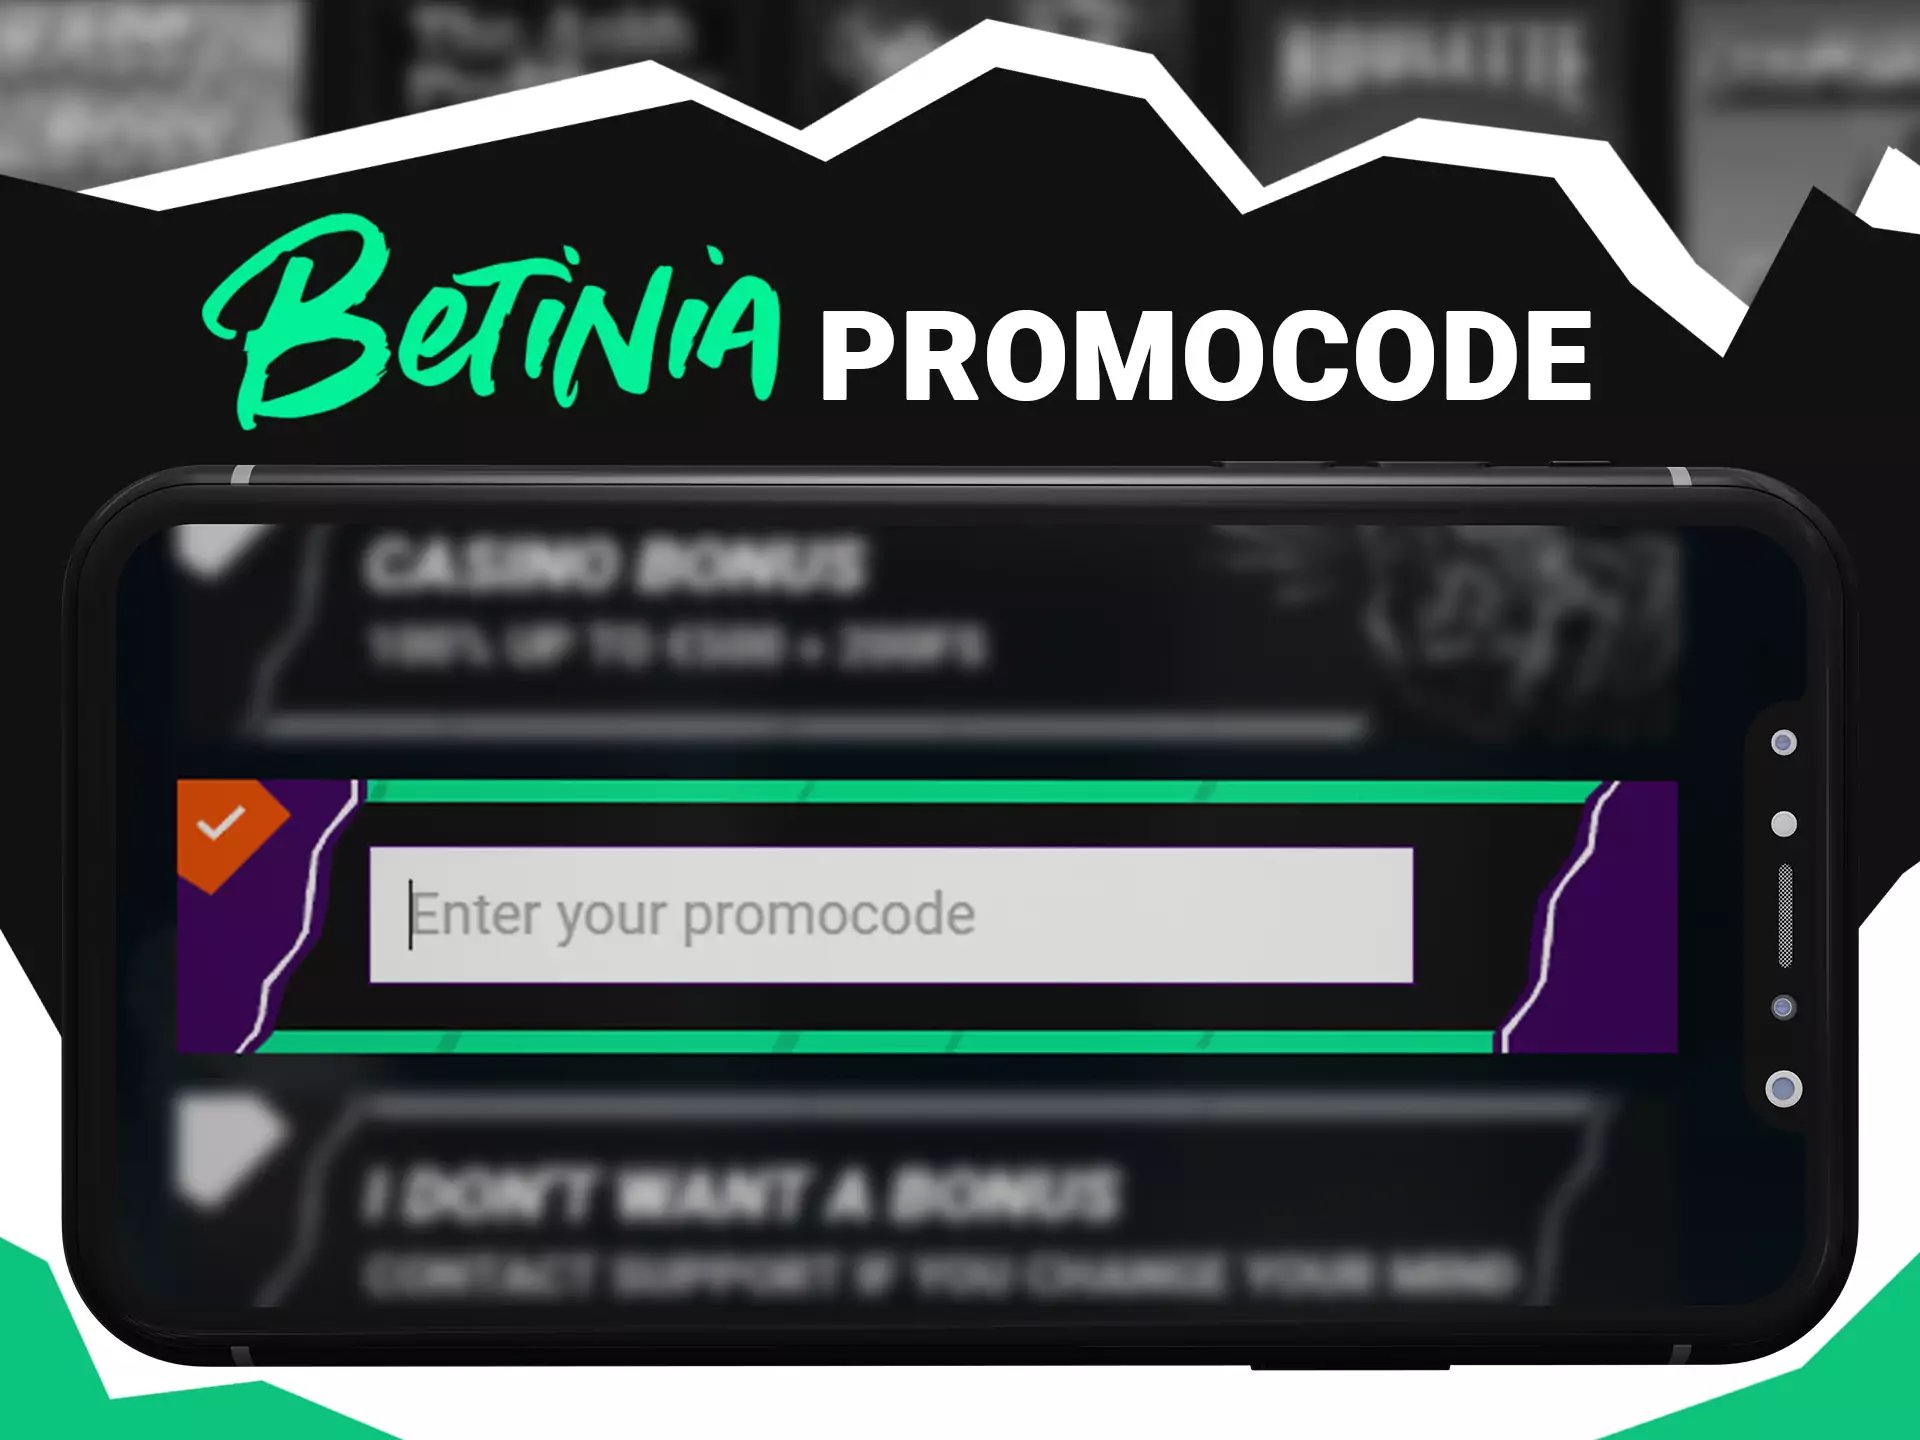 Don't forget to enter your promocode during registration.